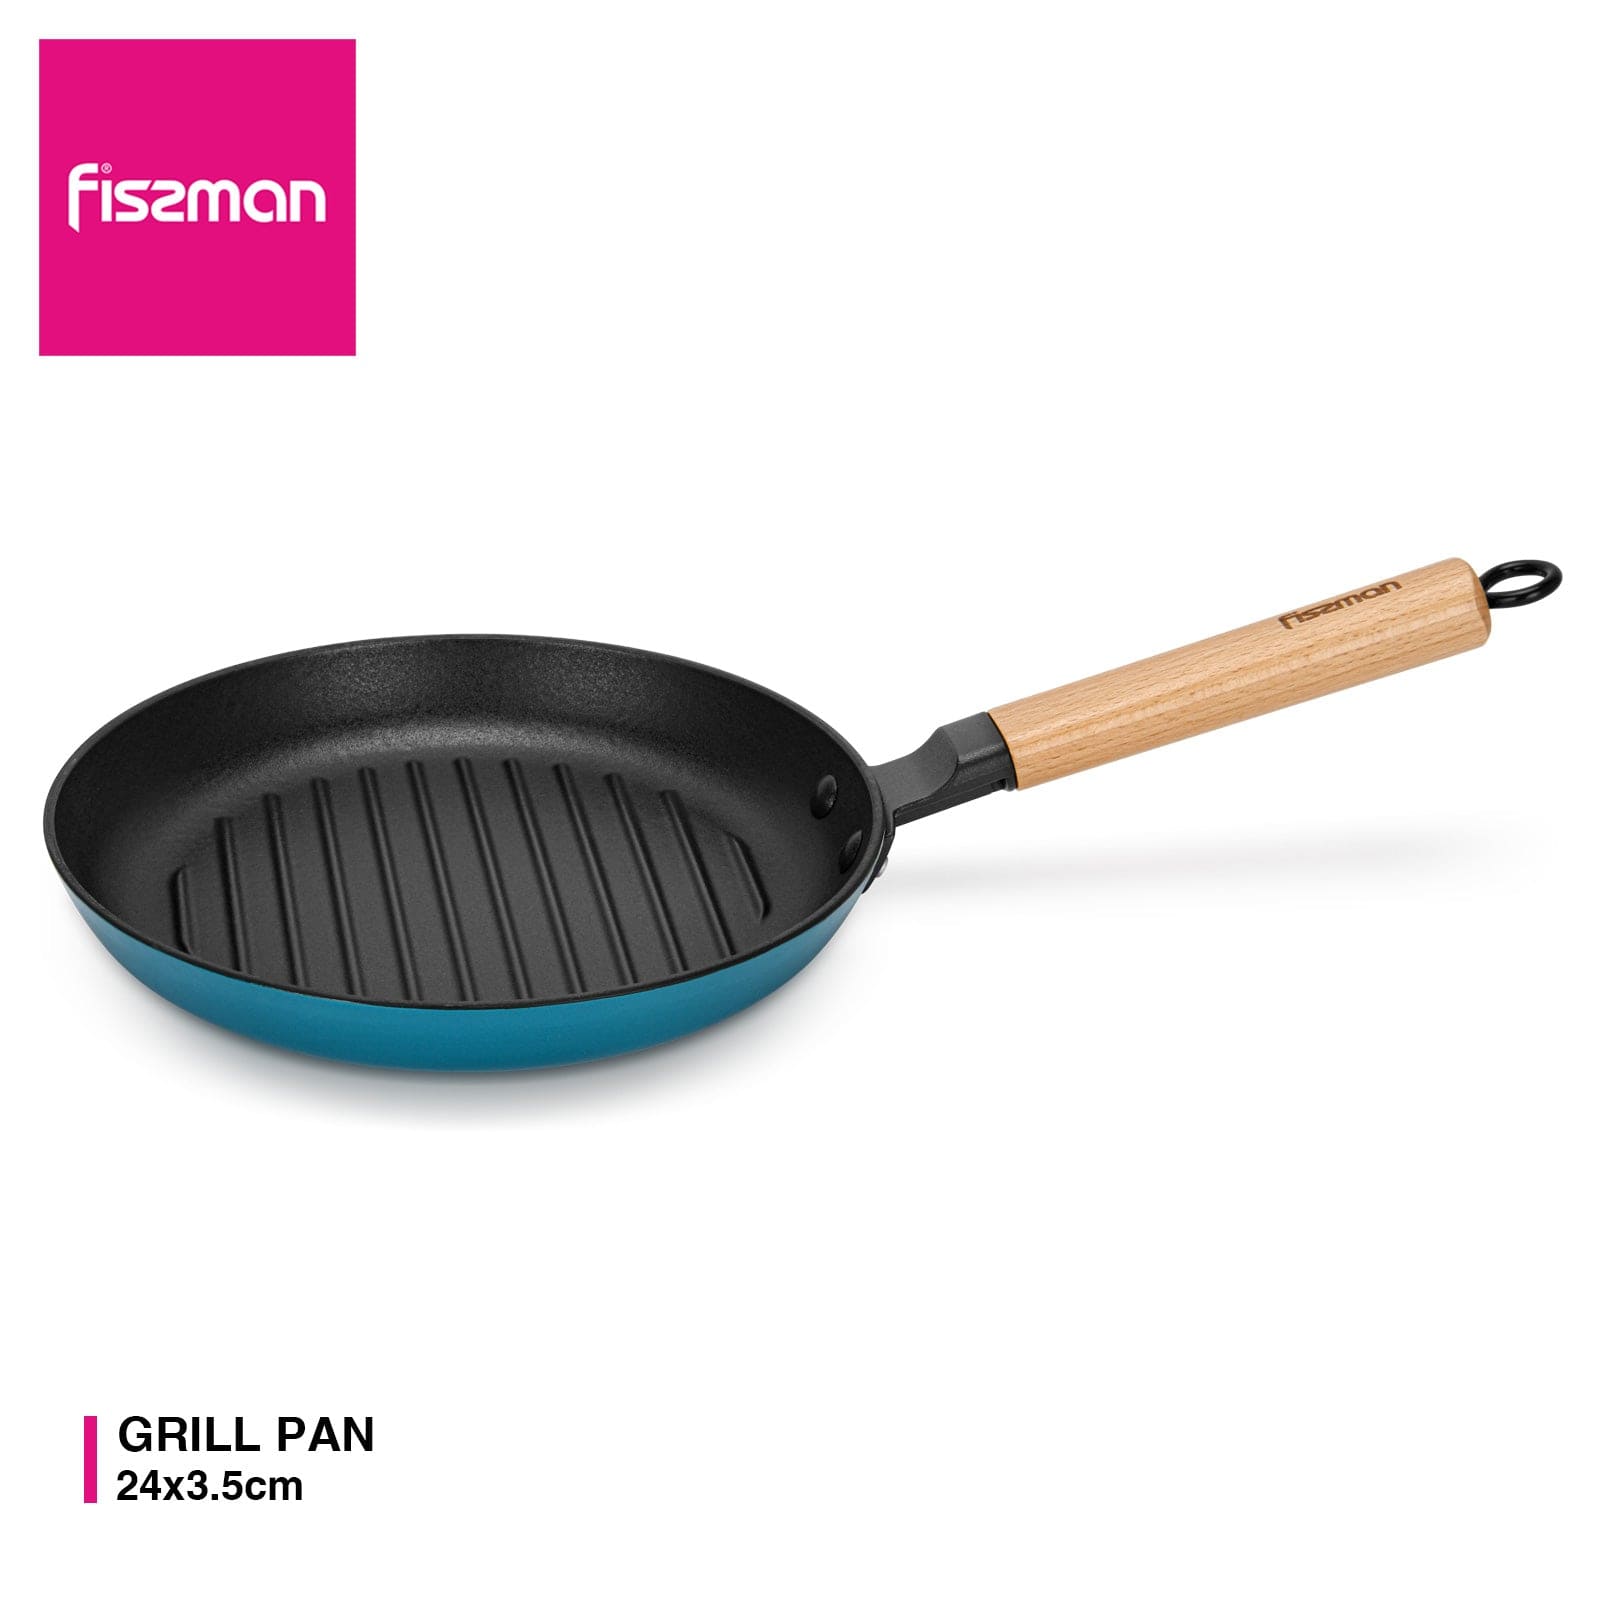 Fissman Grill Pan 24x3.5cm With Wooden Handle (Enamel Cast Iron)